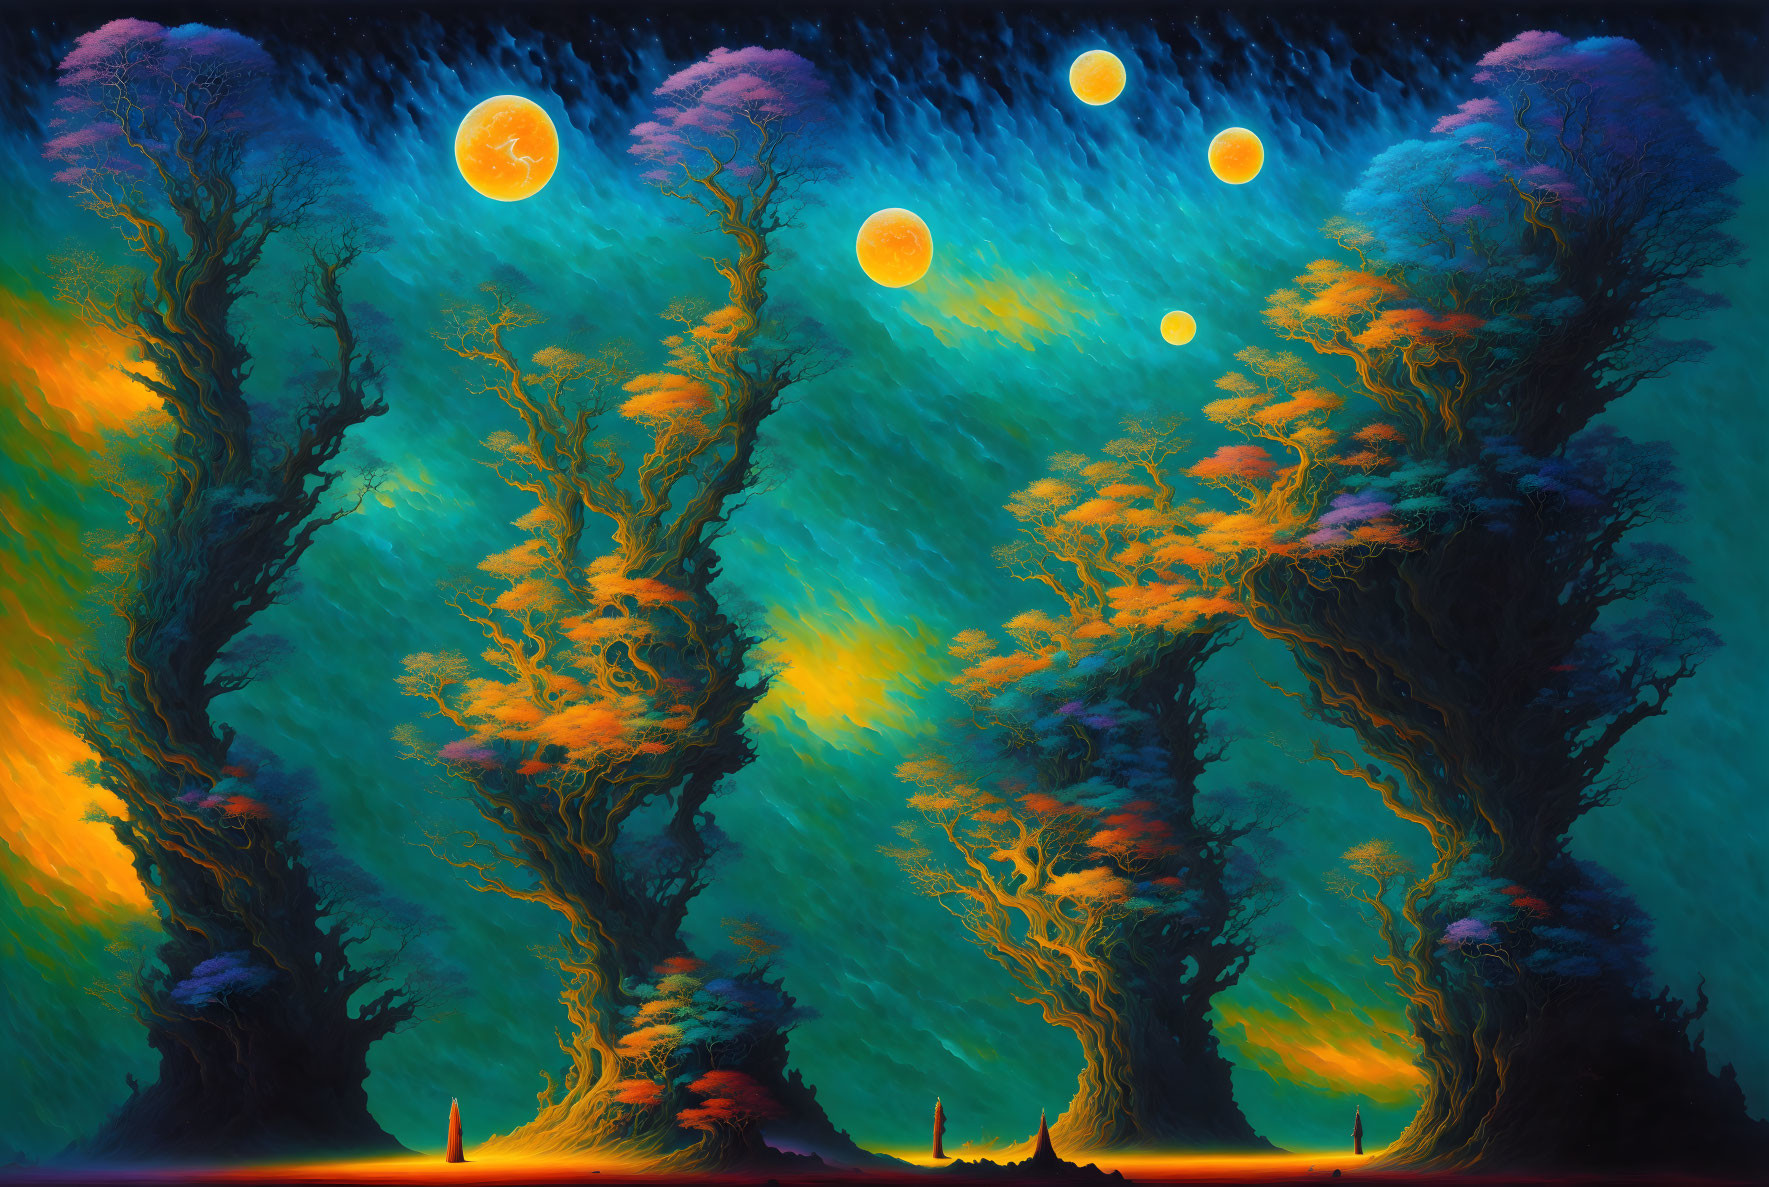 Enchanted Night: Moonlit Canopy